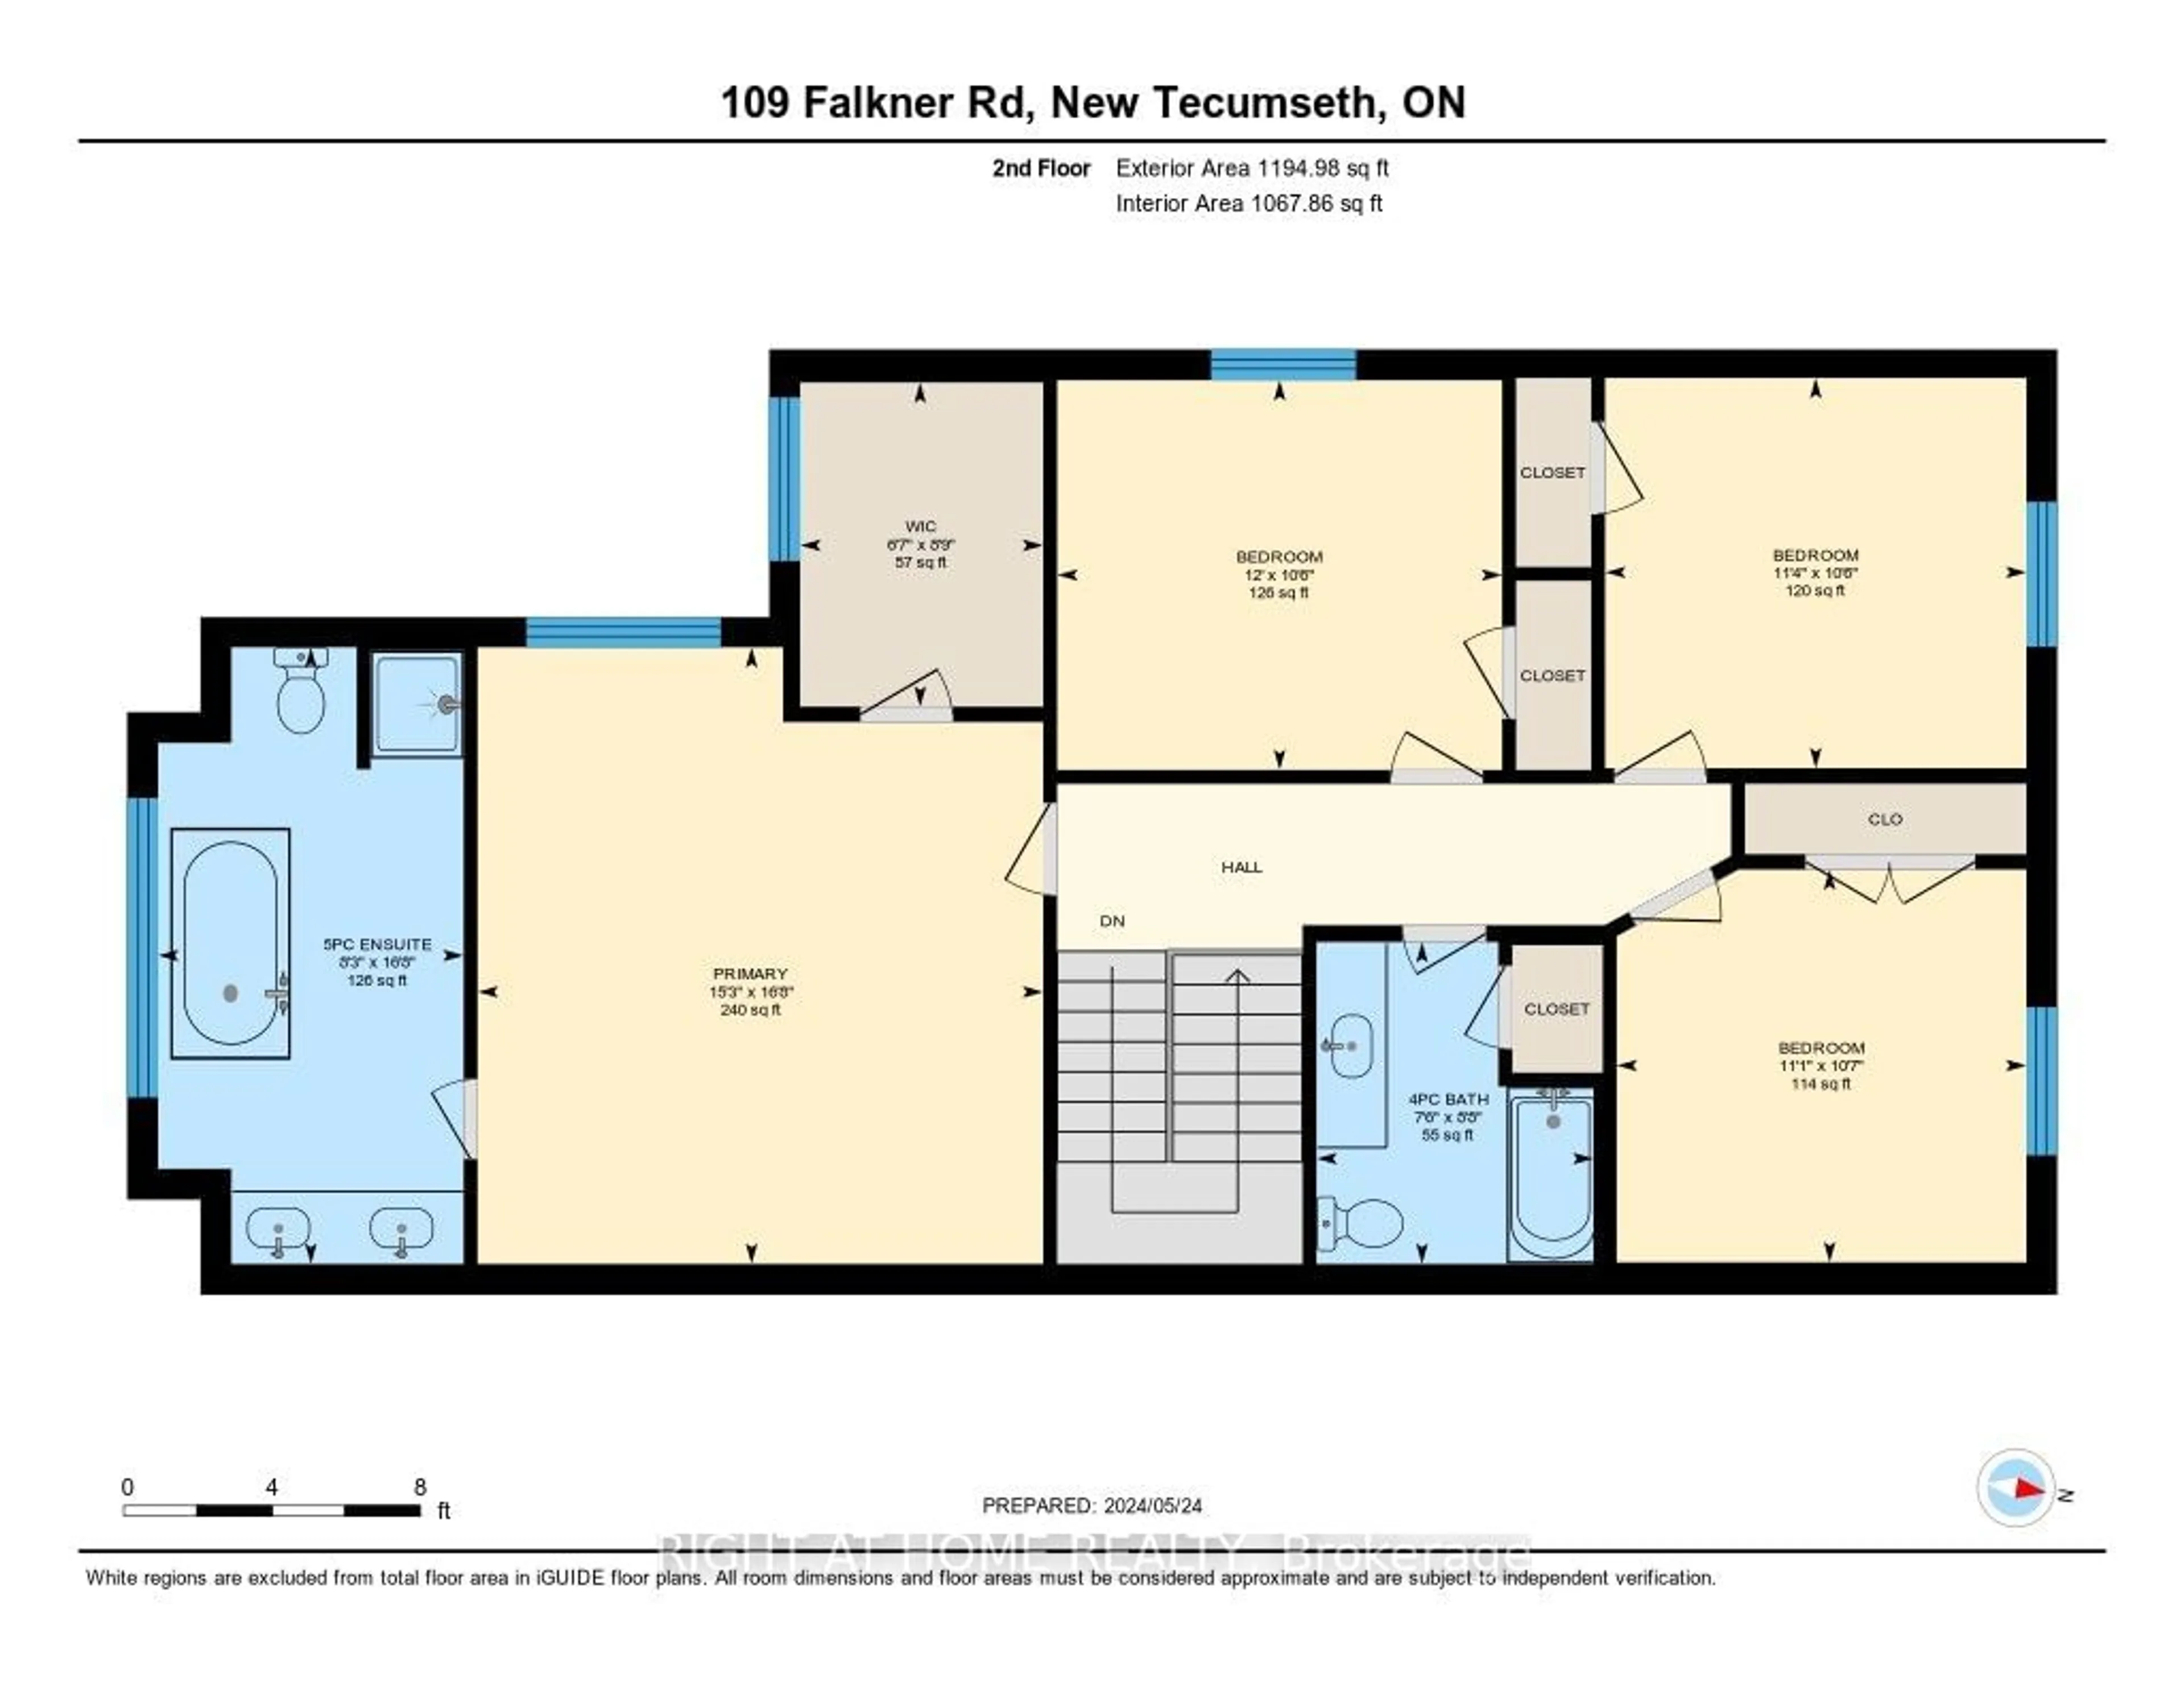 Floor plan for 106 Falkner Rd, New Tecumseth Ontario L9R 0C1